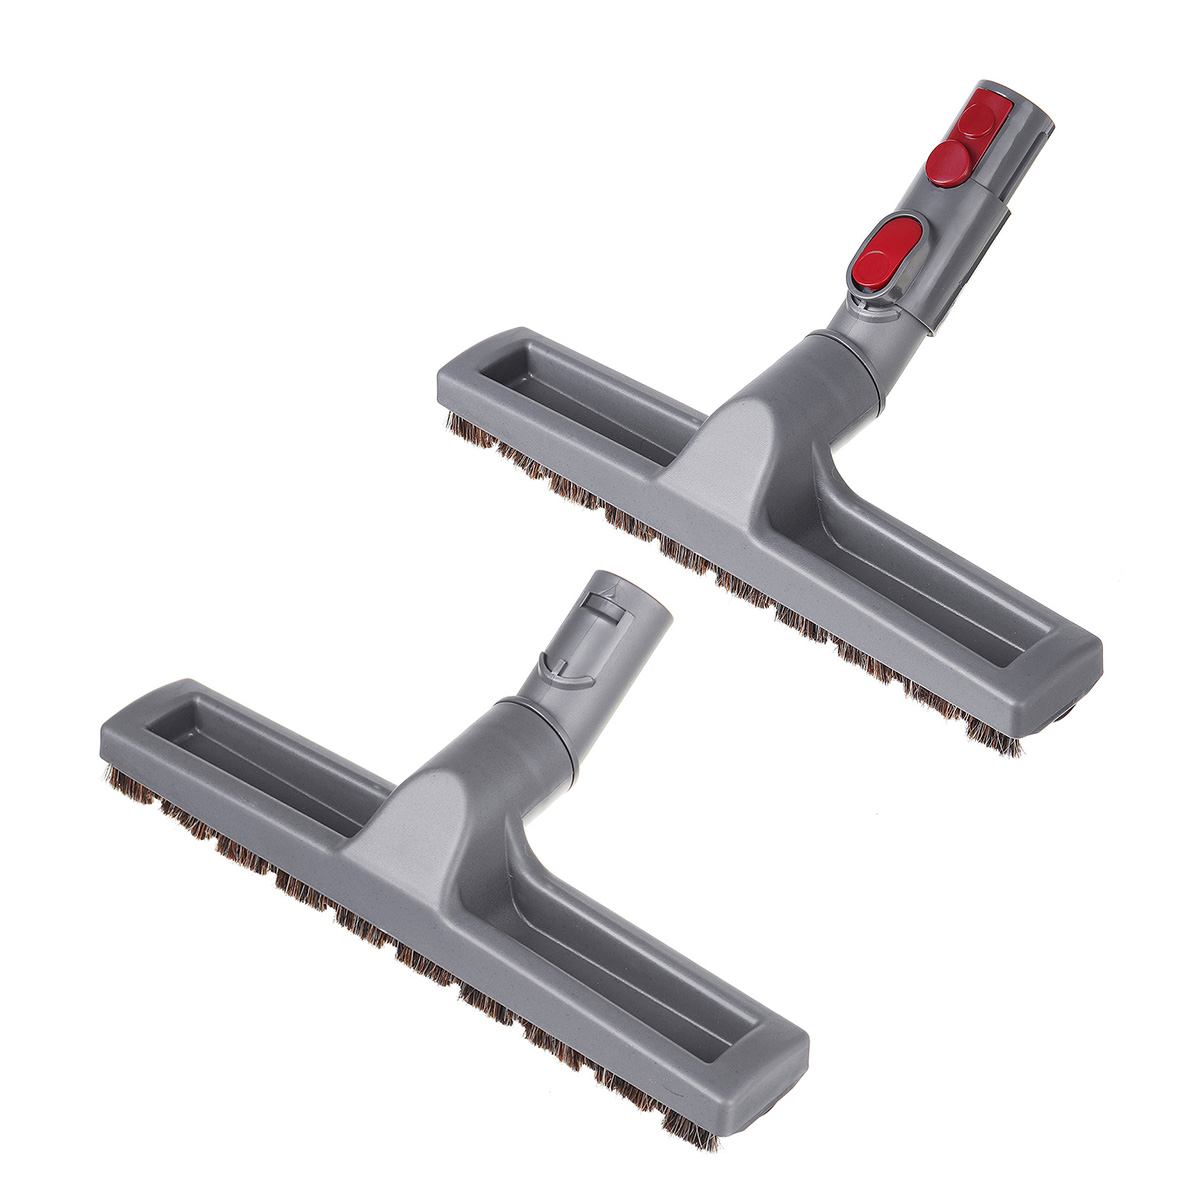 1pcs-Floor-Brush-Replacements-for-Dyson-V6-V7-V8-V10-V11-Vacuum-Cleaner-Parts-Accessories-1818338-5